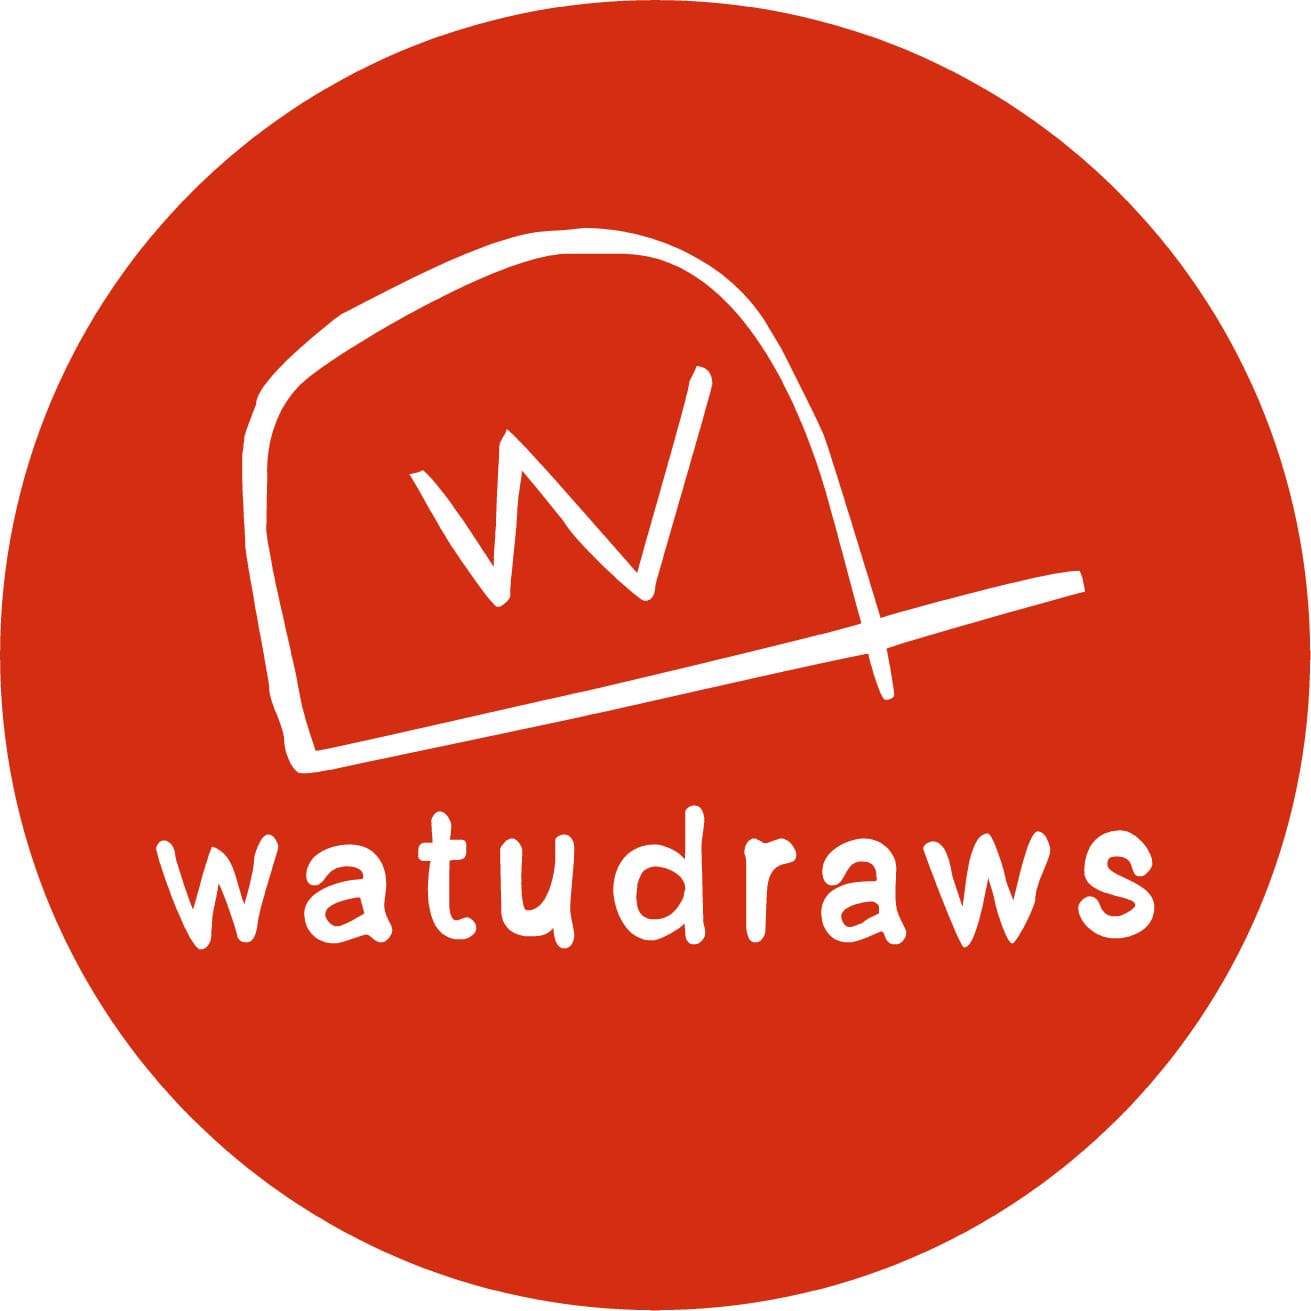 Make your walls speak with WatuDraws